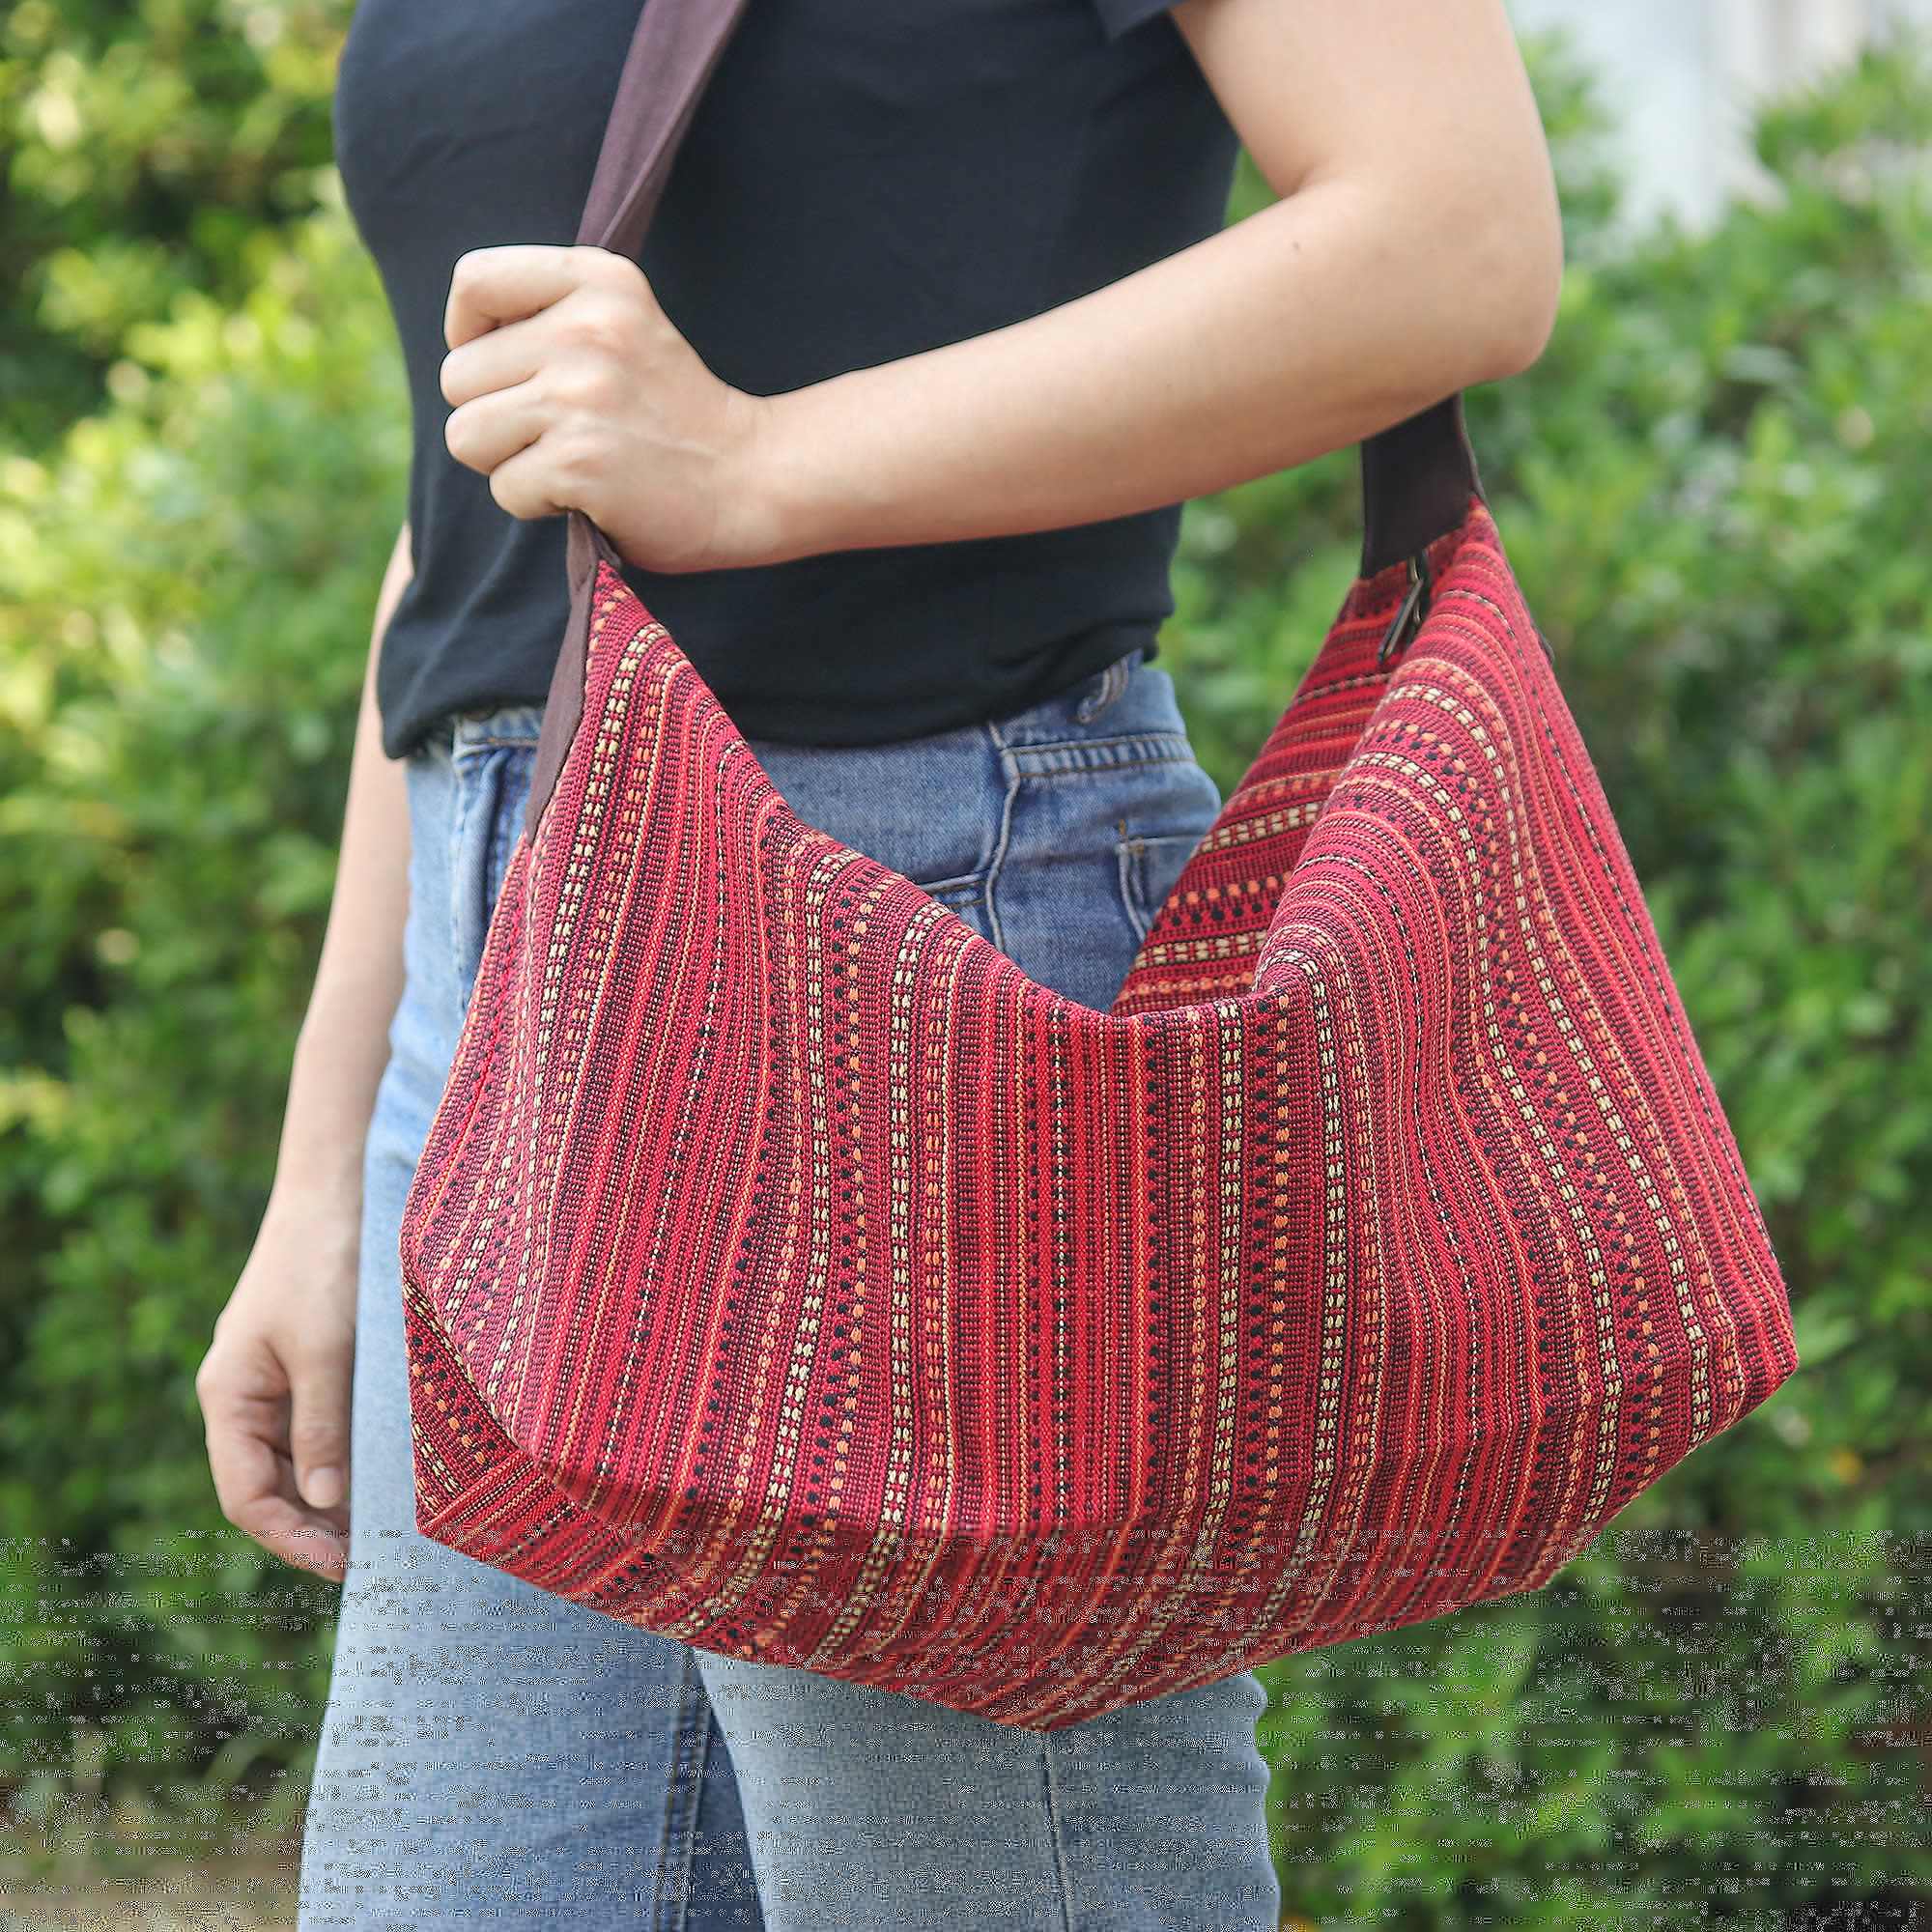 Cole Haan Pink Patent Leather Hobo Purse Handbag | eBay